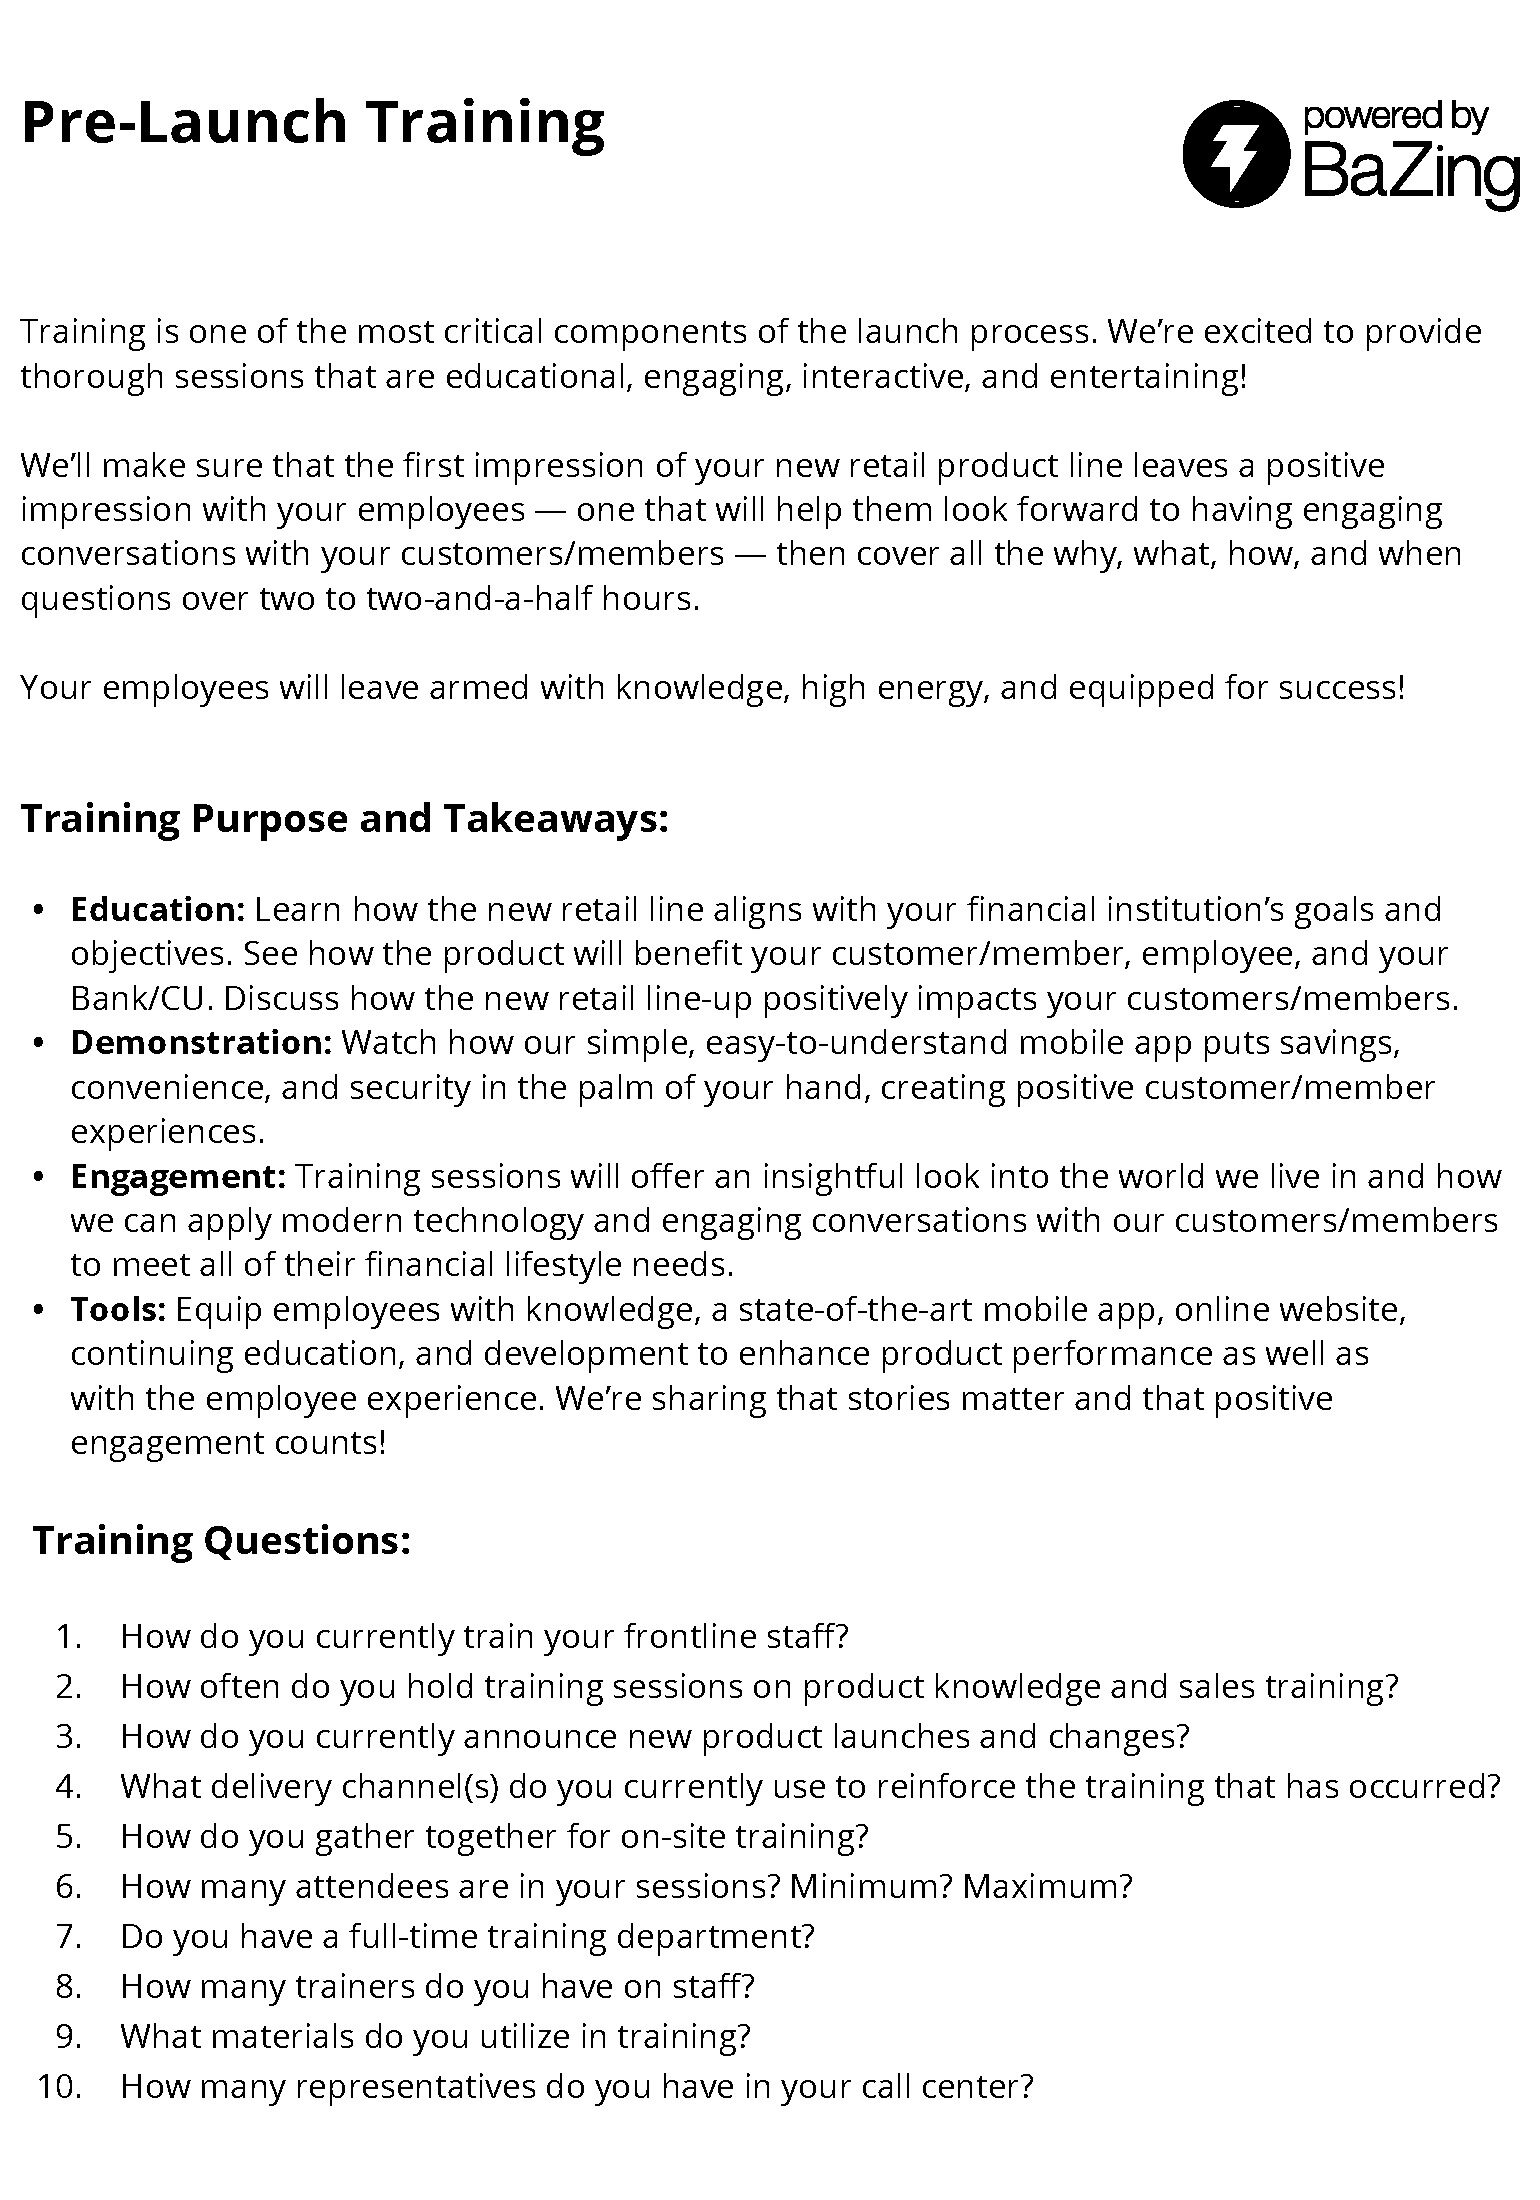 Pre-Launch Training Questions (Print Version)